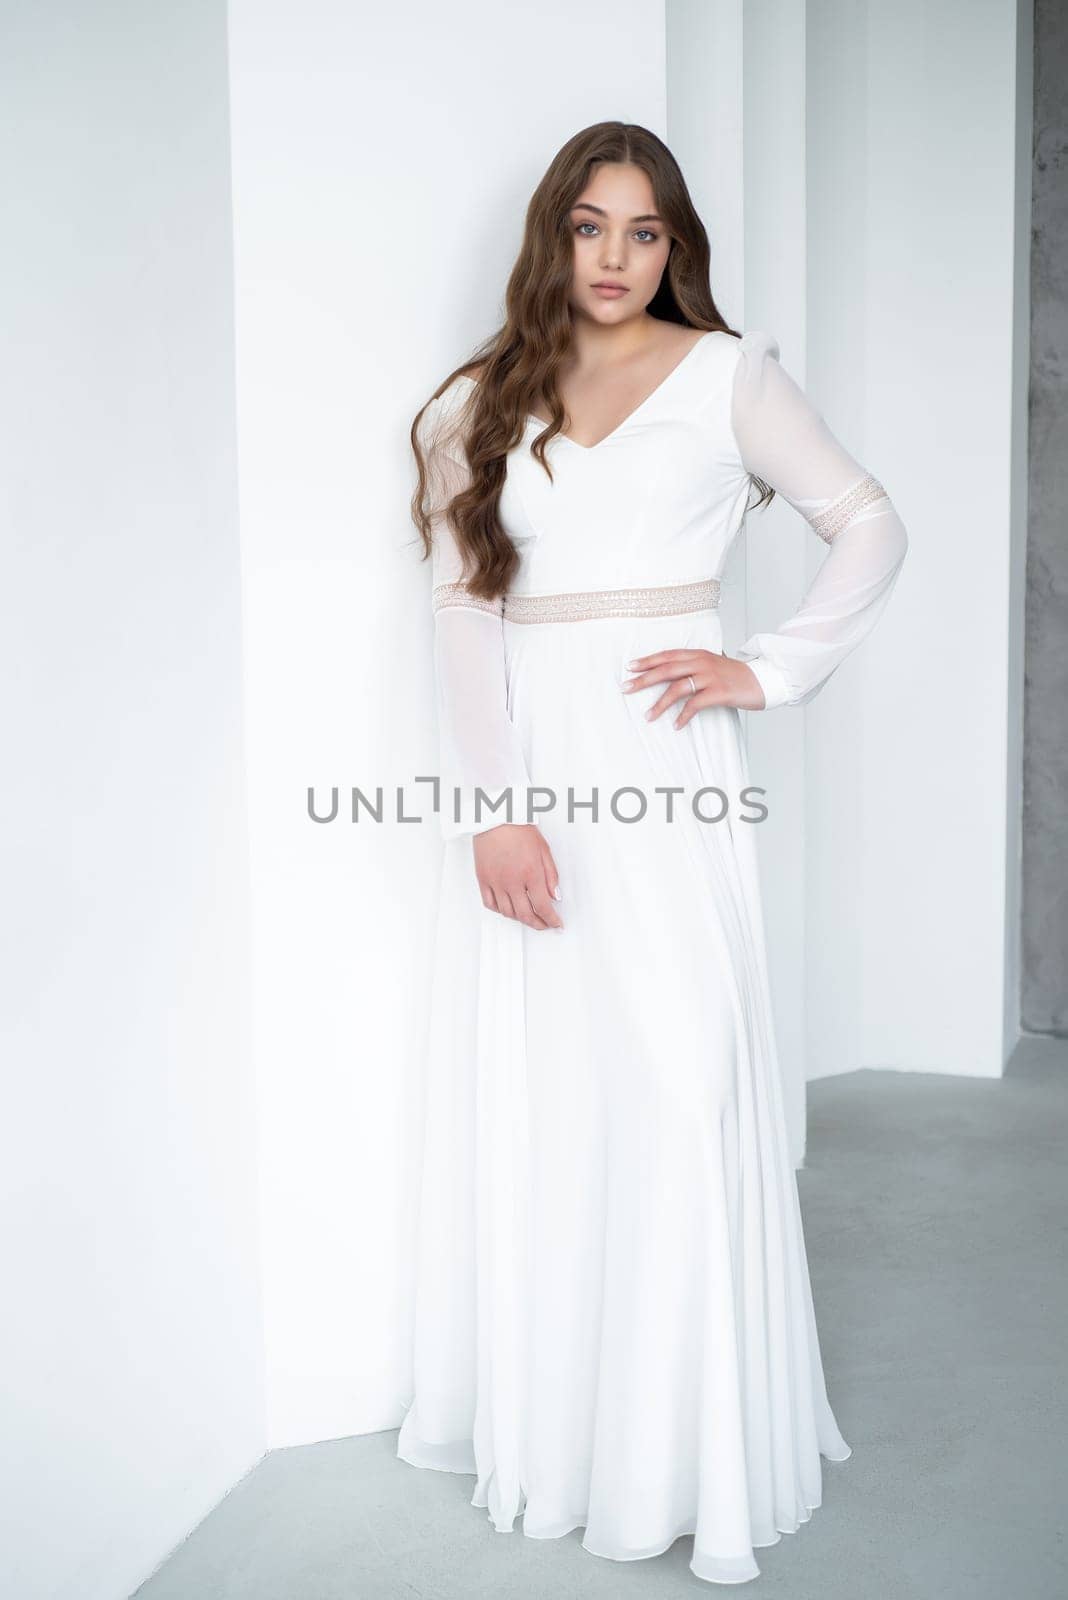 portrait of beautiful young woman in white wedding dress posing in studio